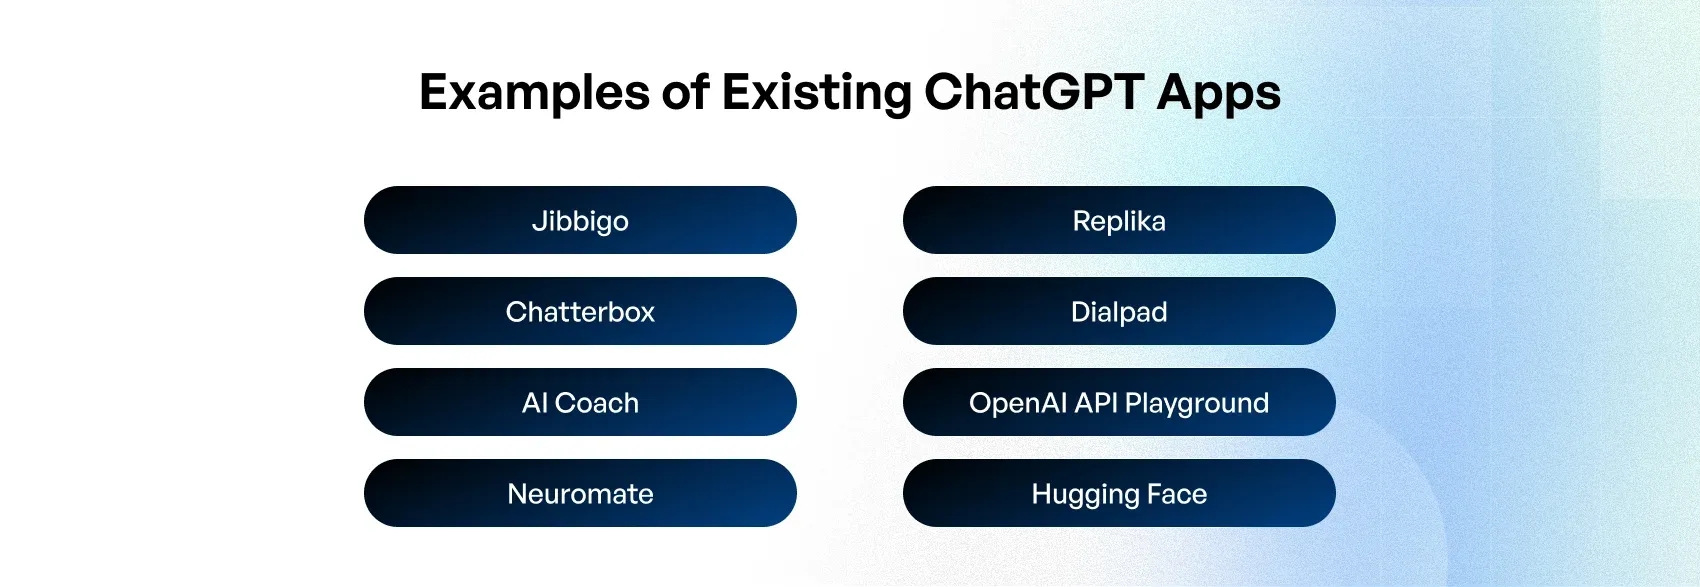 chatgpt-based applications